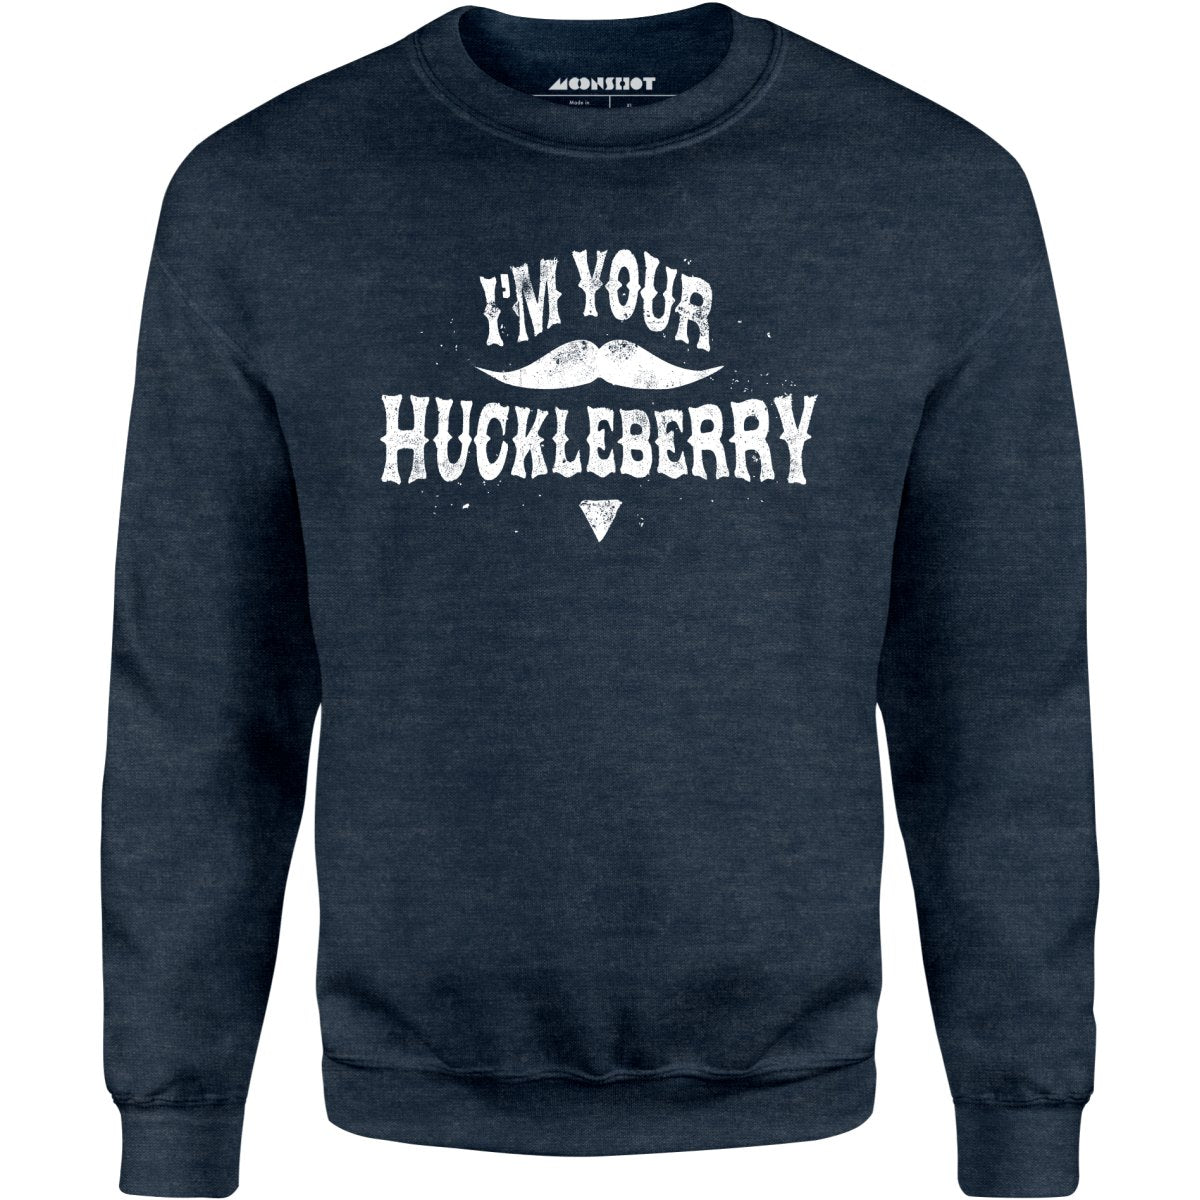 I'm Your Huckleberry - Unisex Sweatshirt